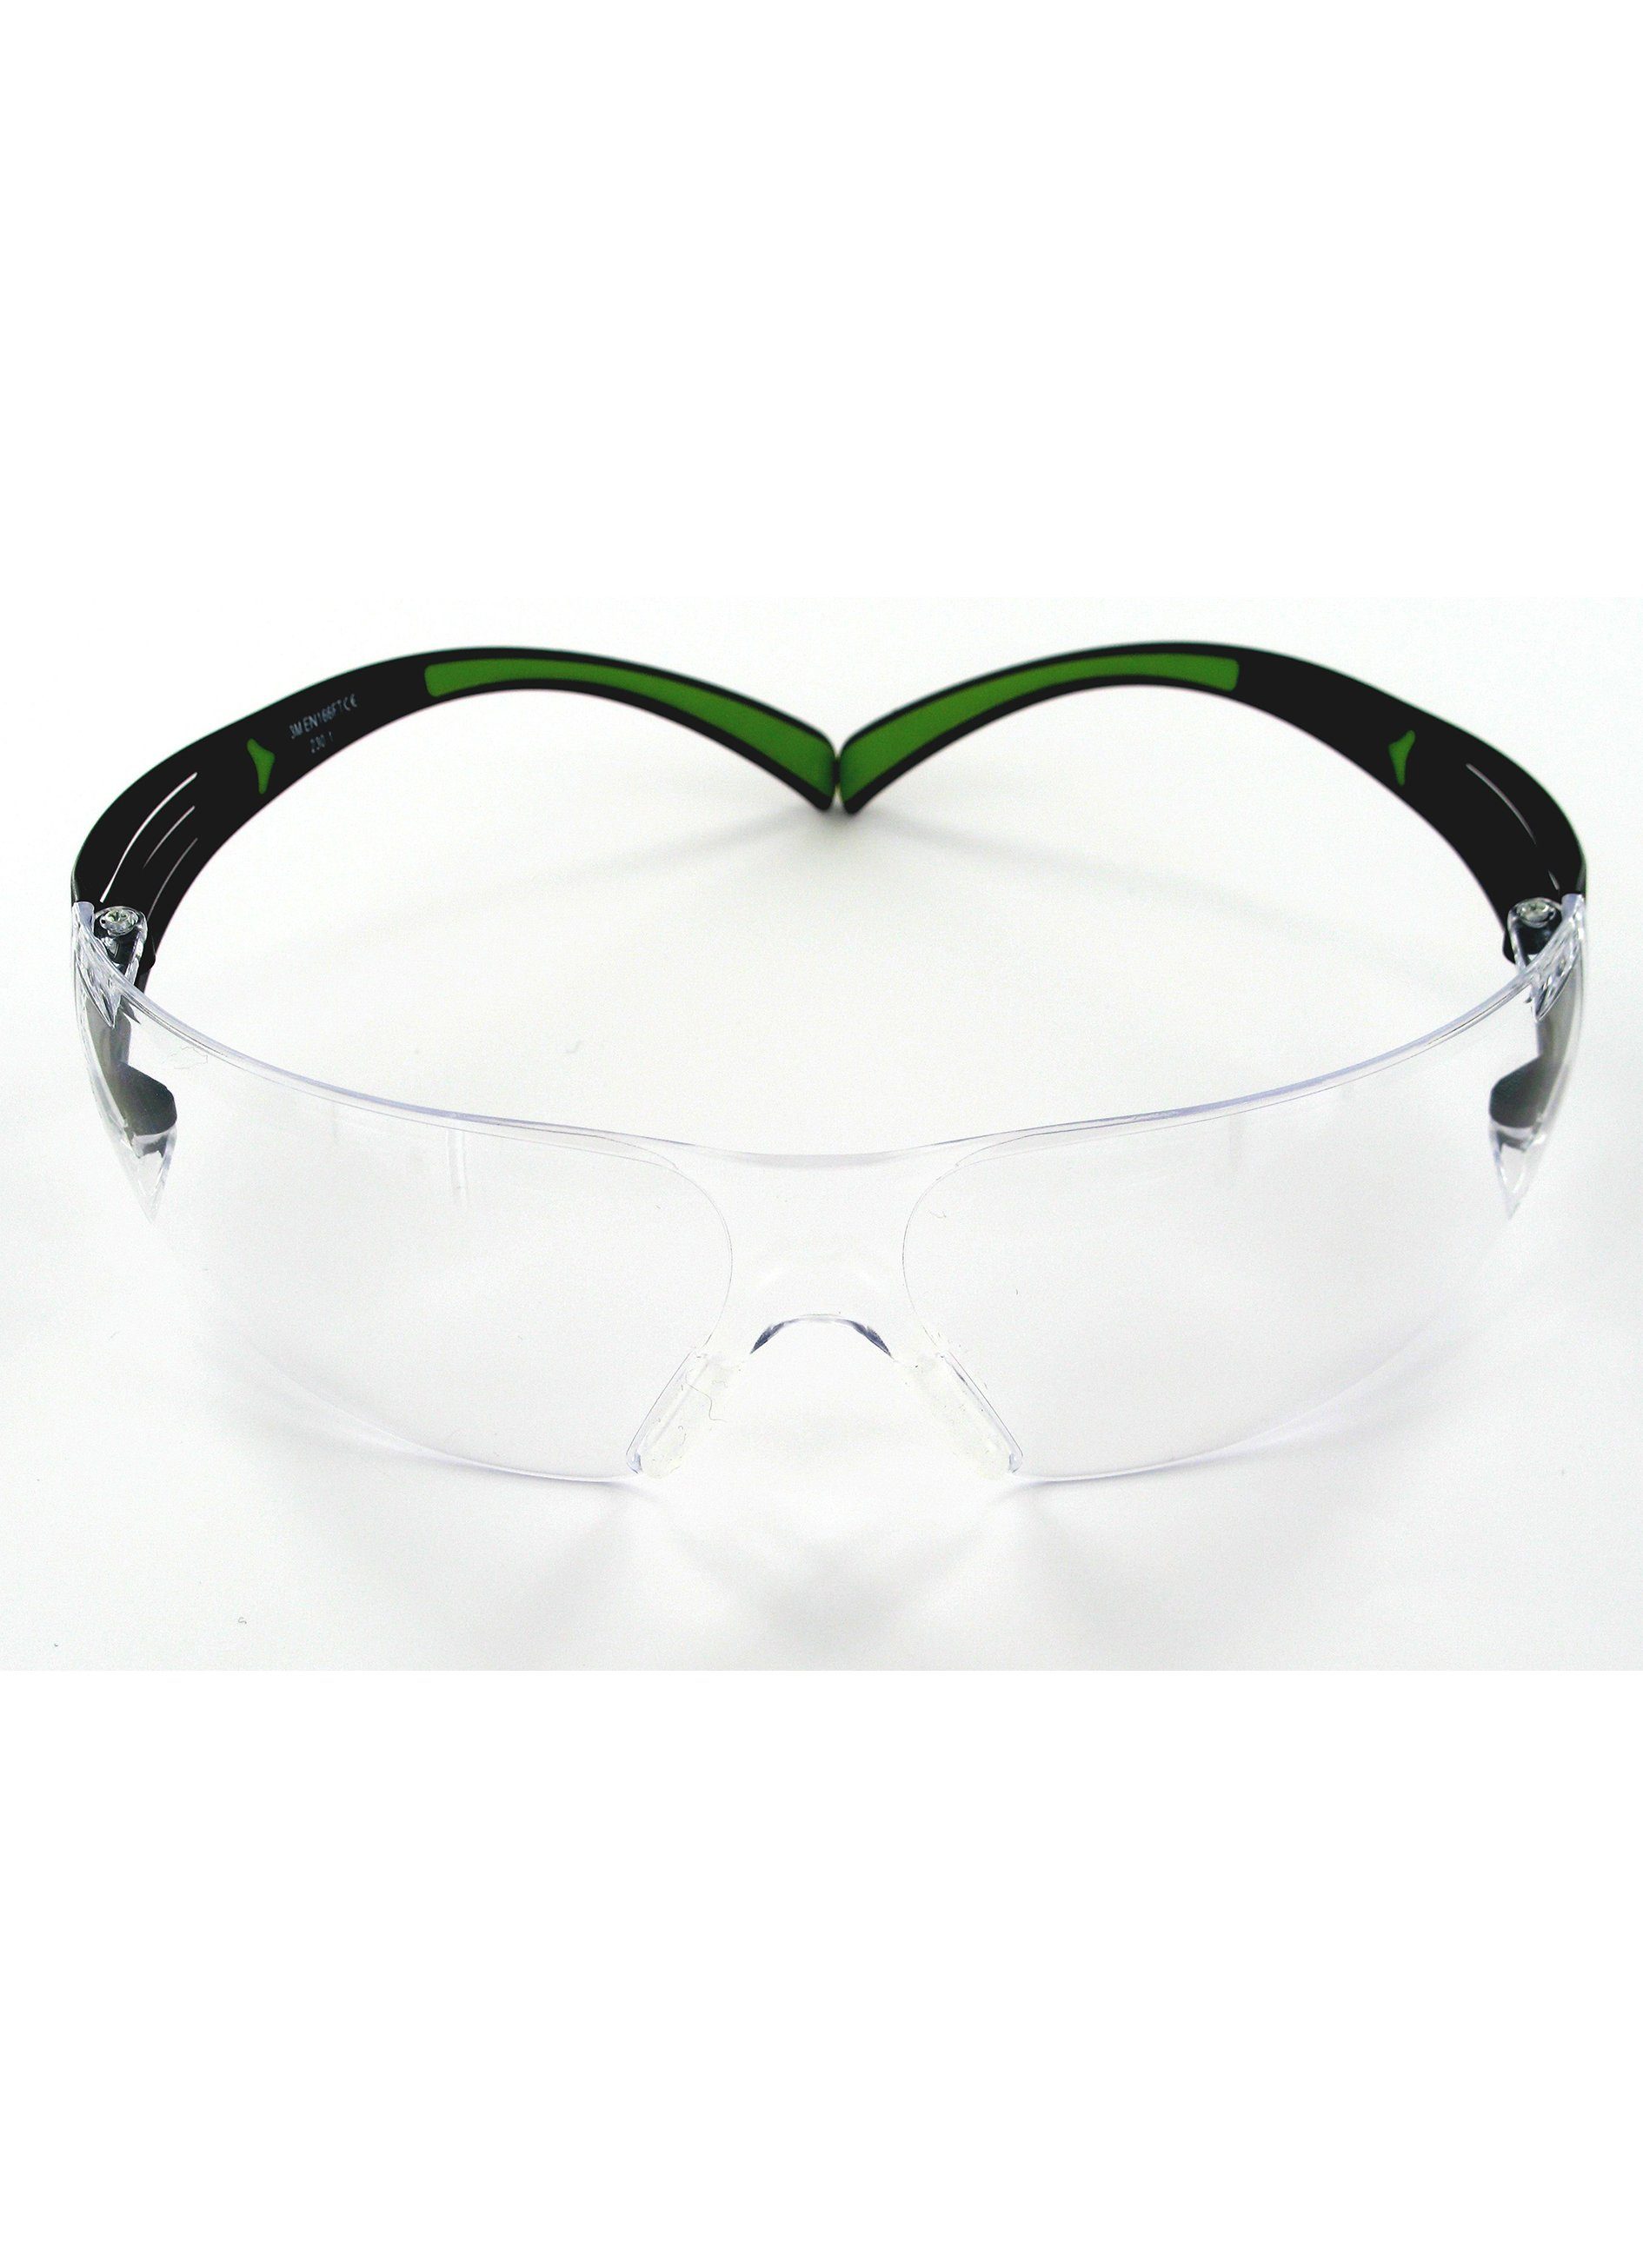 3M Brille 3M SecureFit Schutzbrille & SF401AF, Anti-Fog- klar, Anti-Scratch-Beschichtung